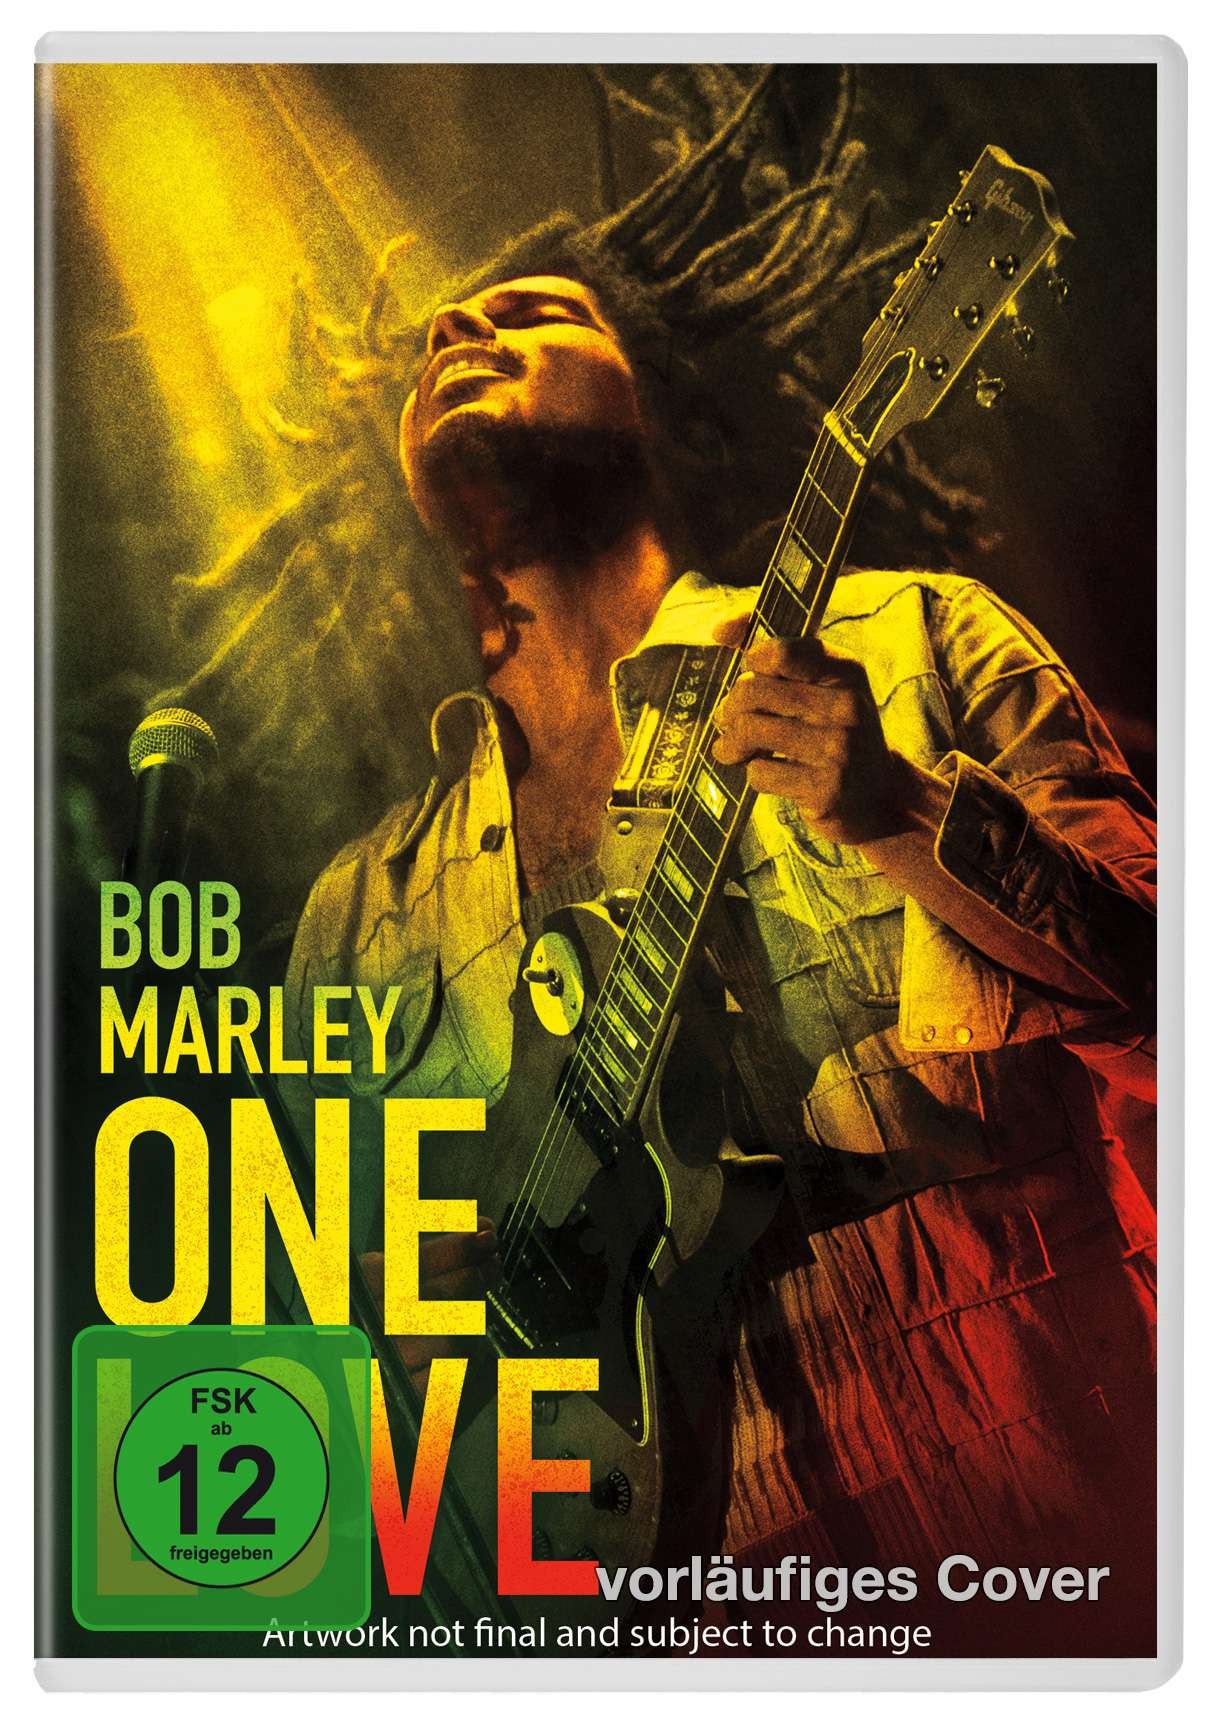 Bob Marley - One Love  DVD